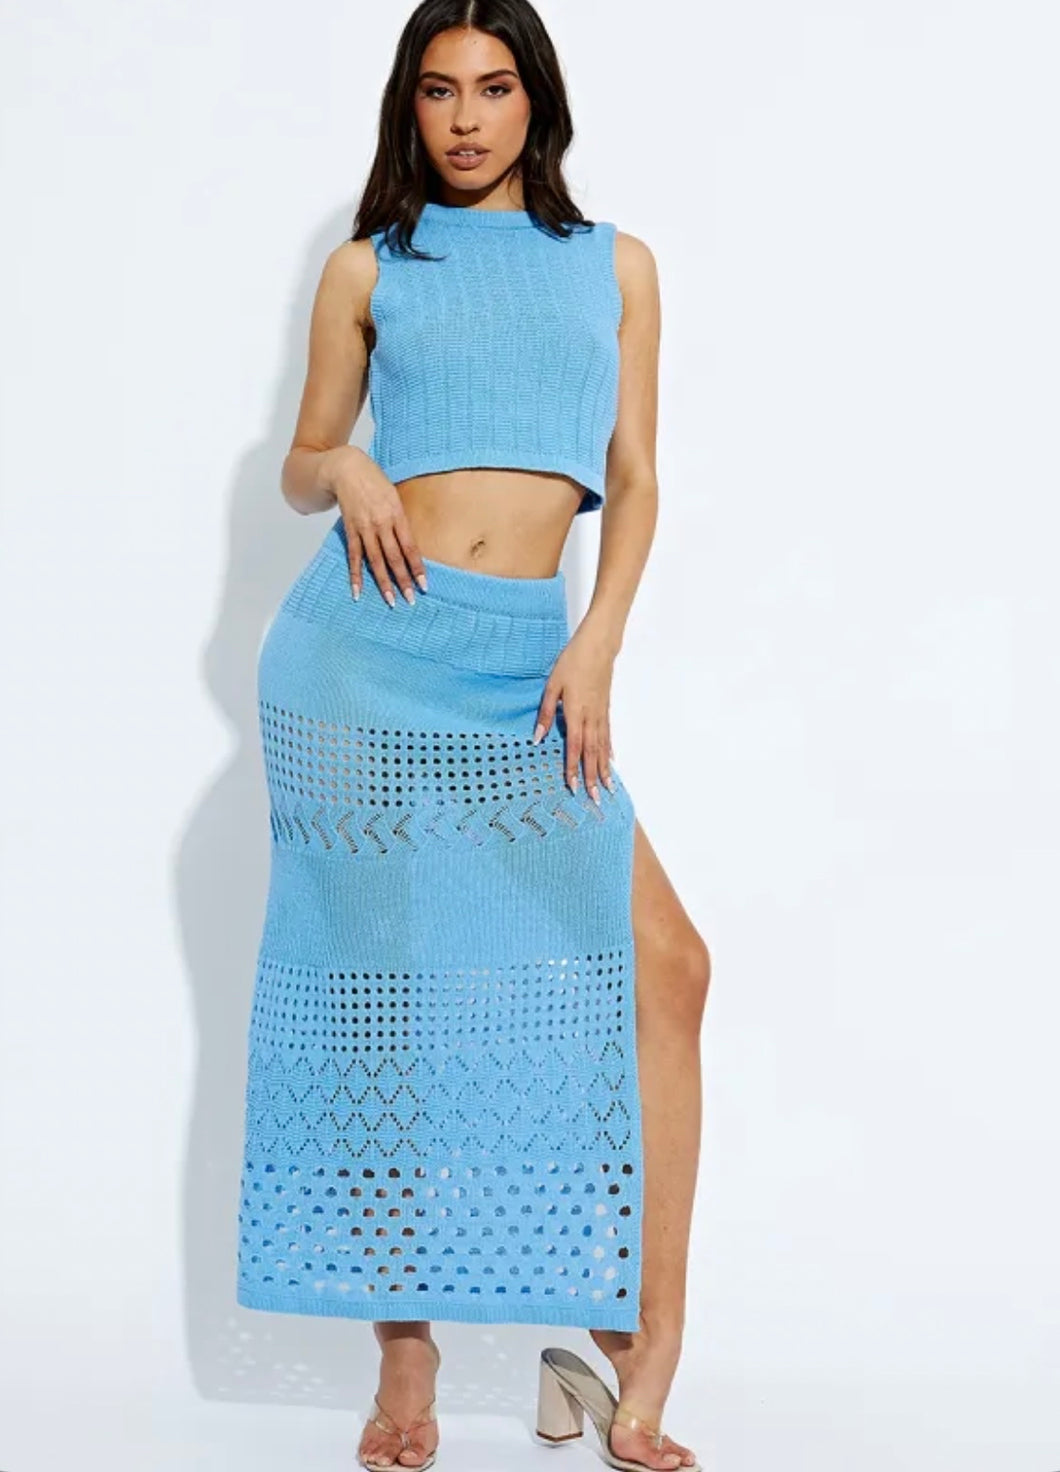 HANNAH knit crop top& slit skirt two piece BLUE